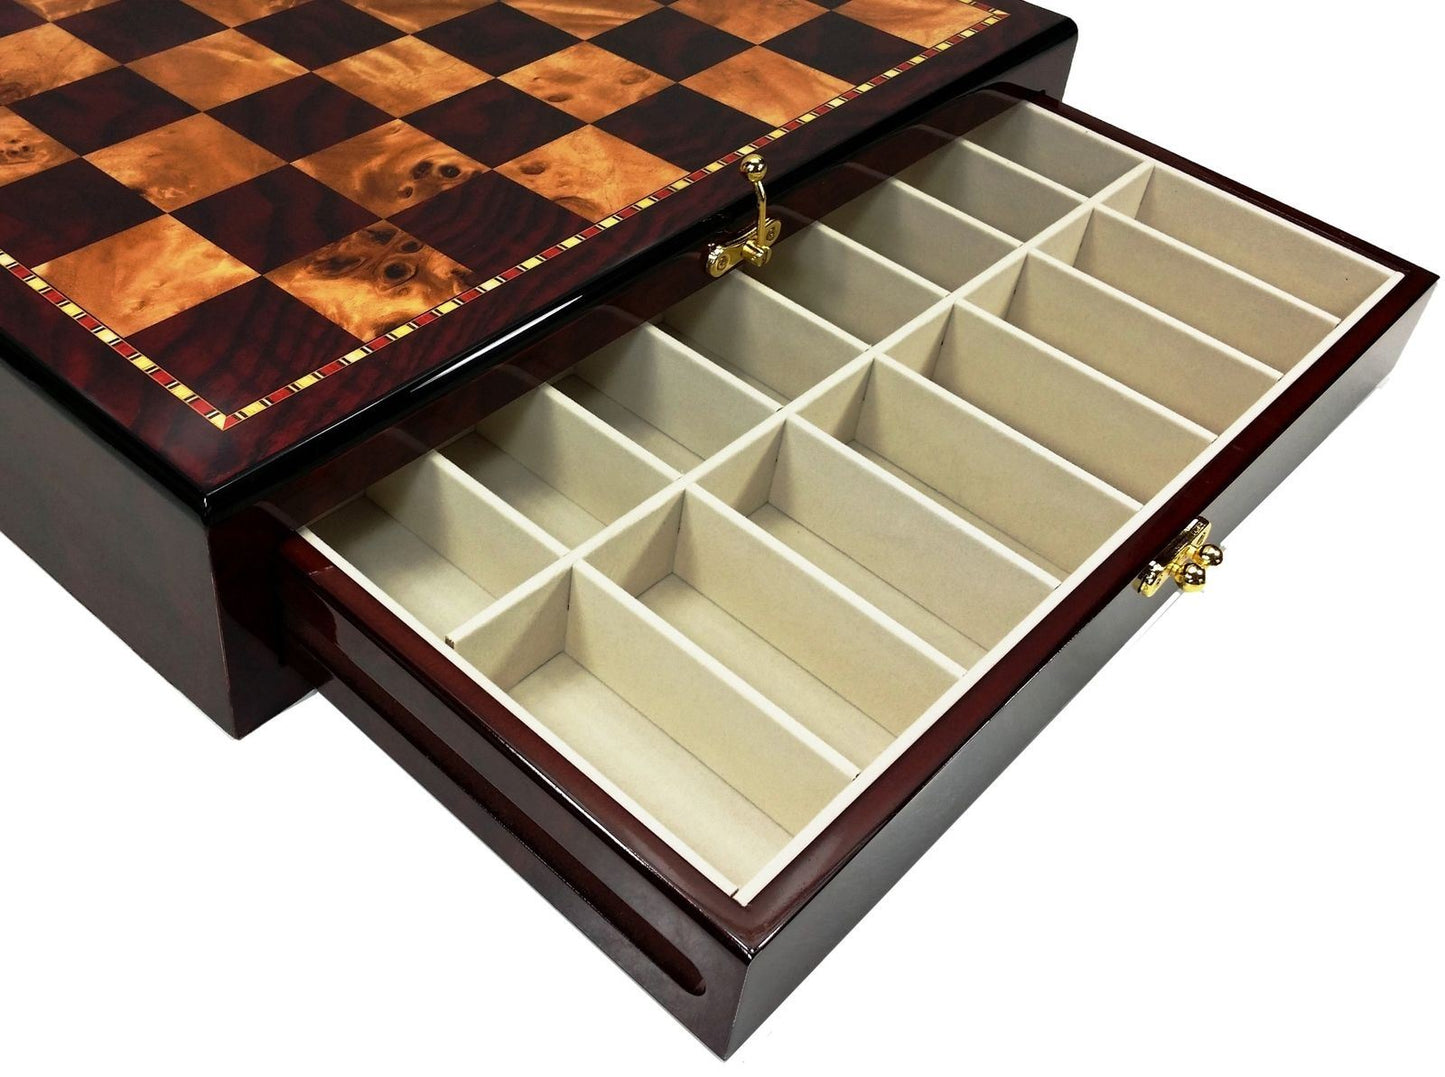 BRASS Black Gold Staunton Bridled Knight Chess Set Cherry Color Storage Board